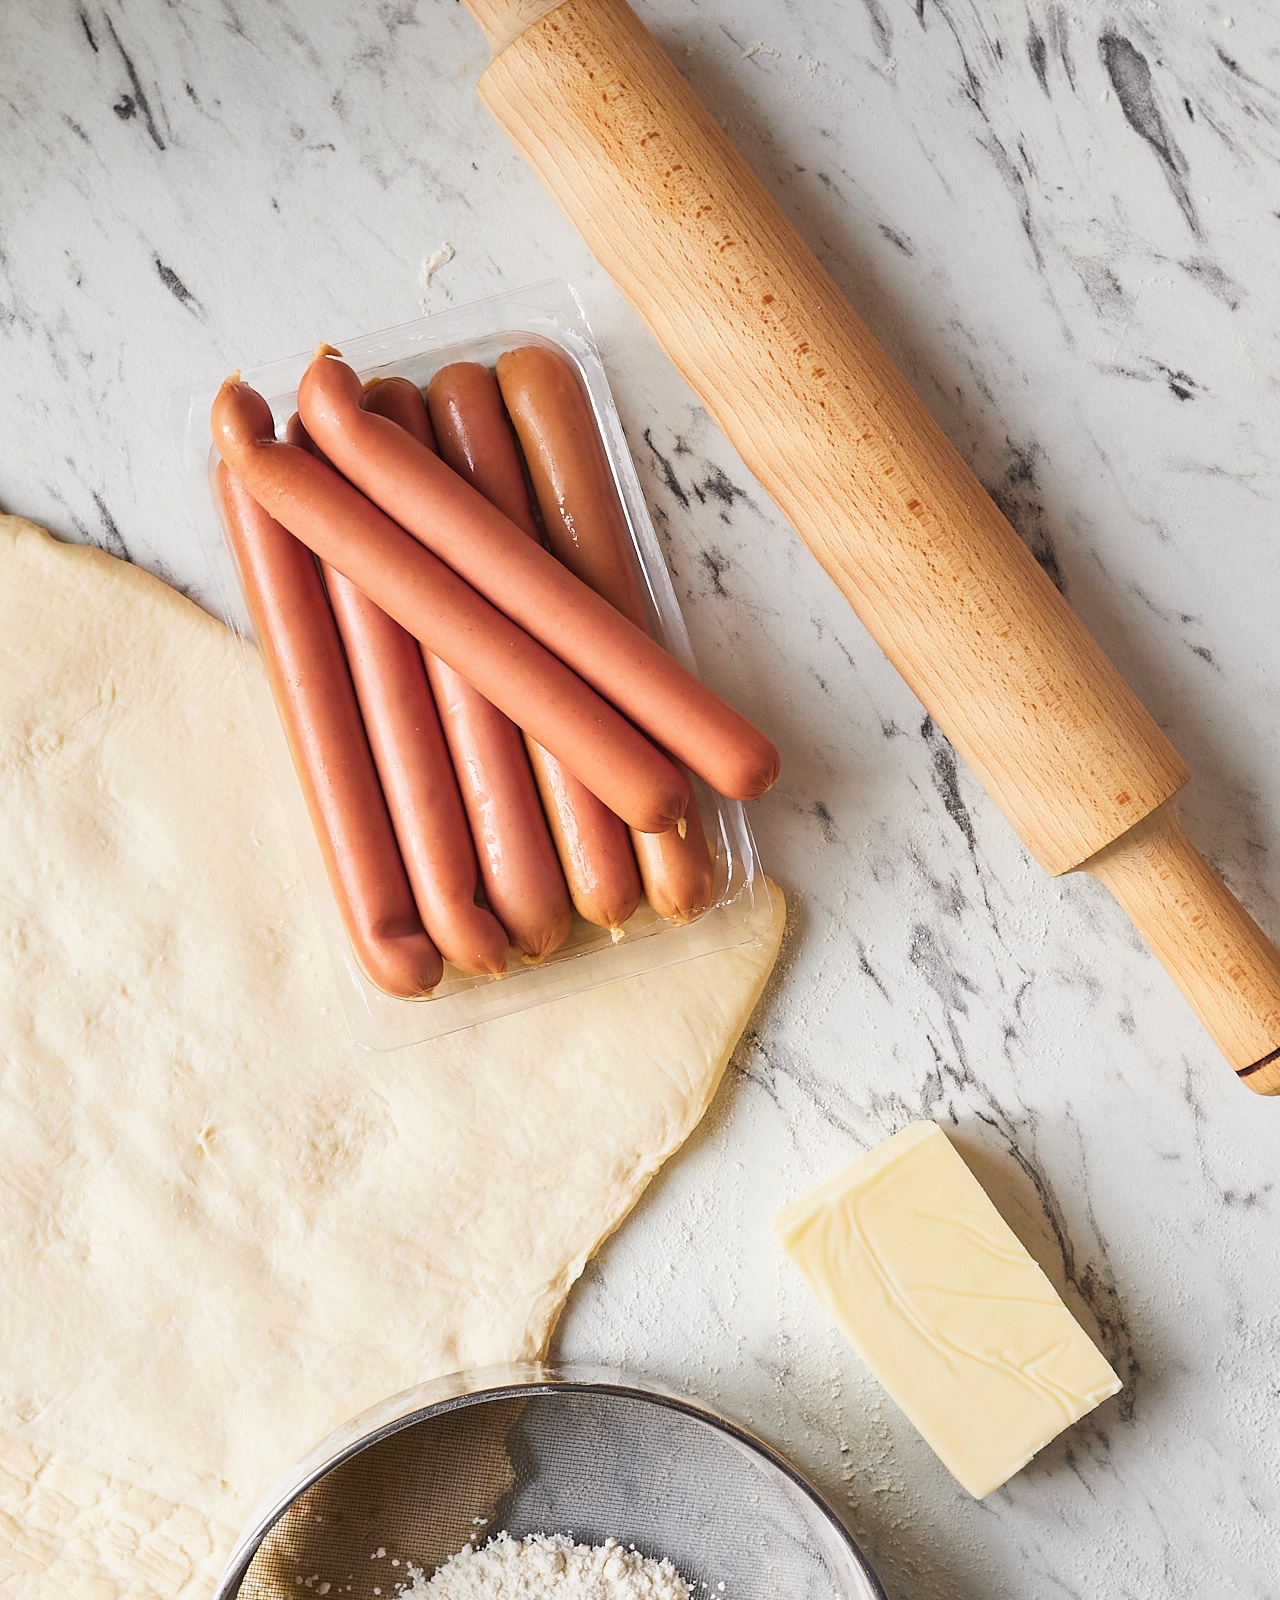 Crescent hot dog recipe